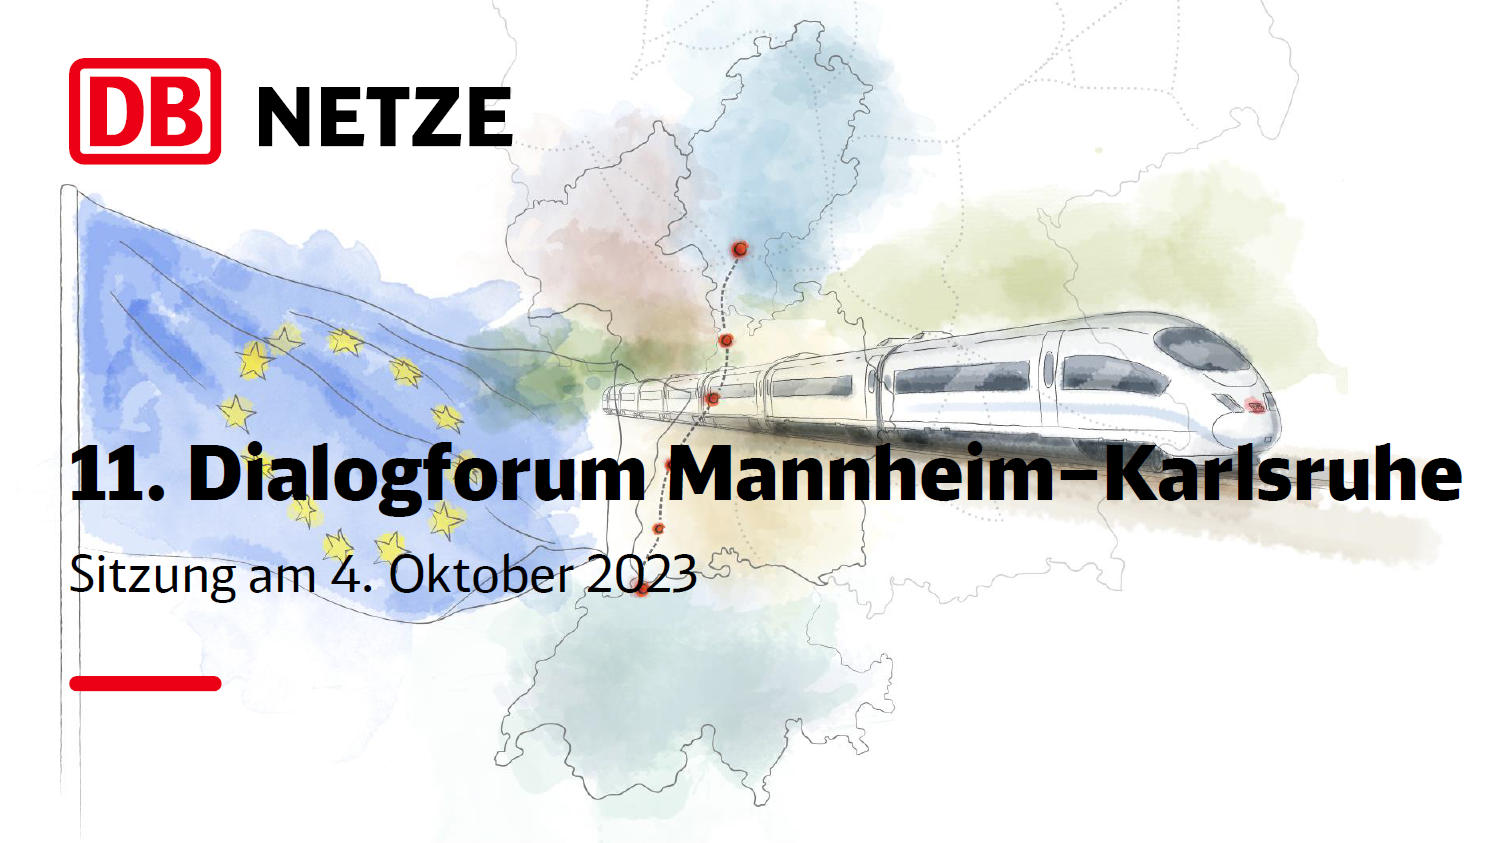 Dialogforum Mannheim-Karlsruhe